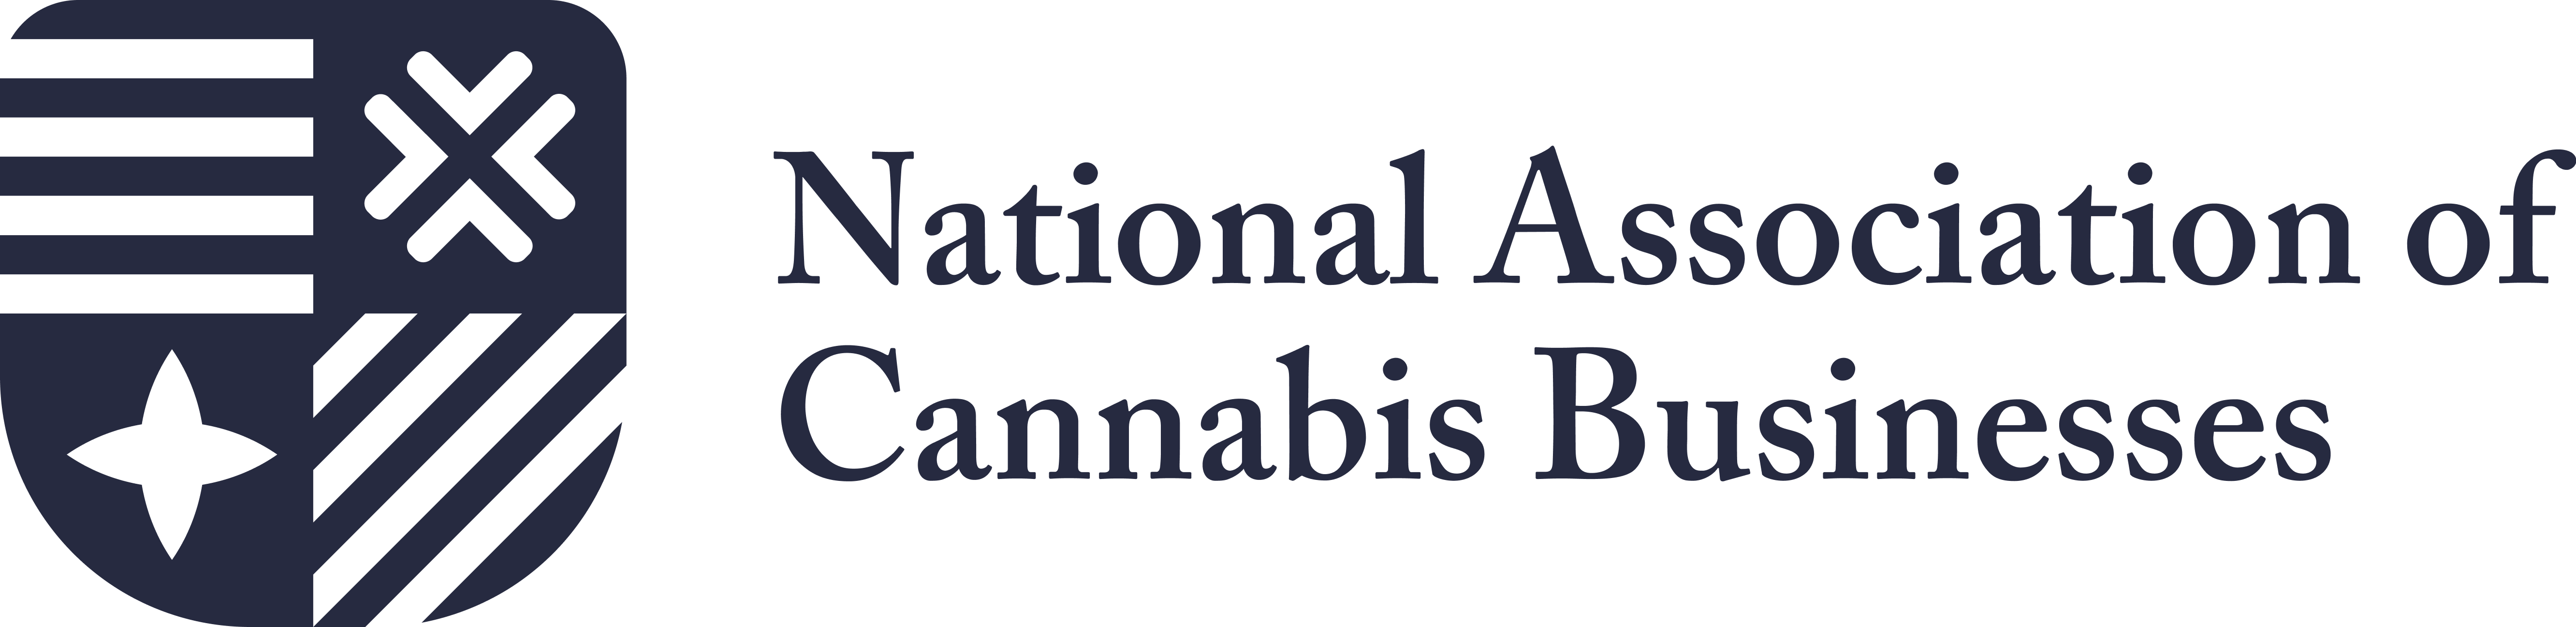 National Association of Cannabis Business (NACB)